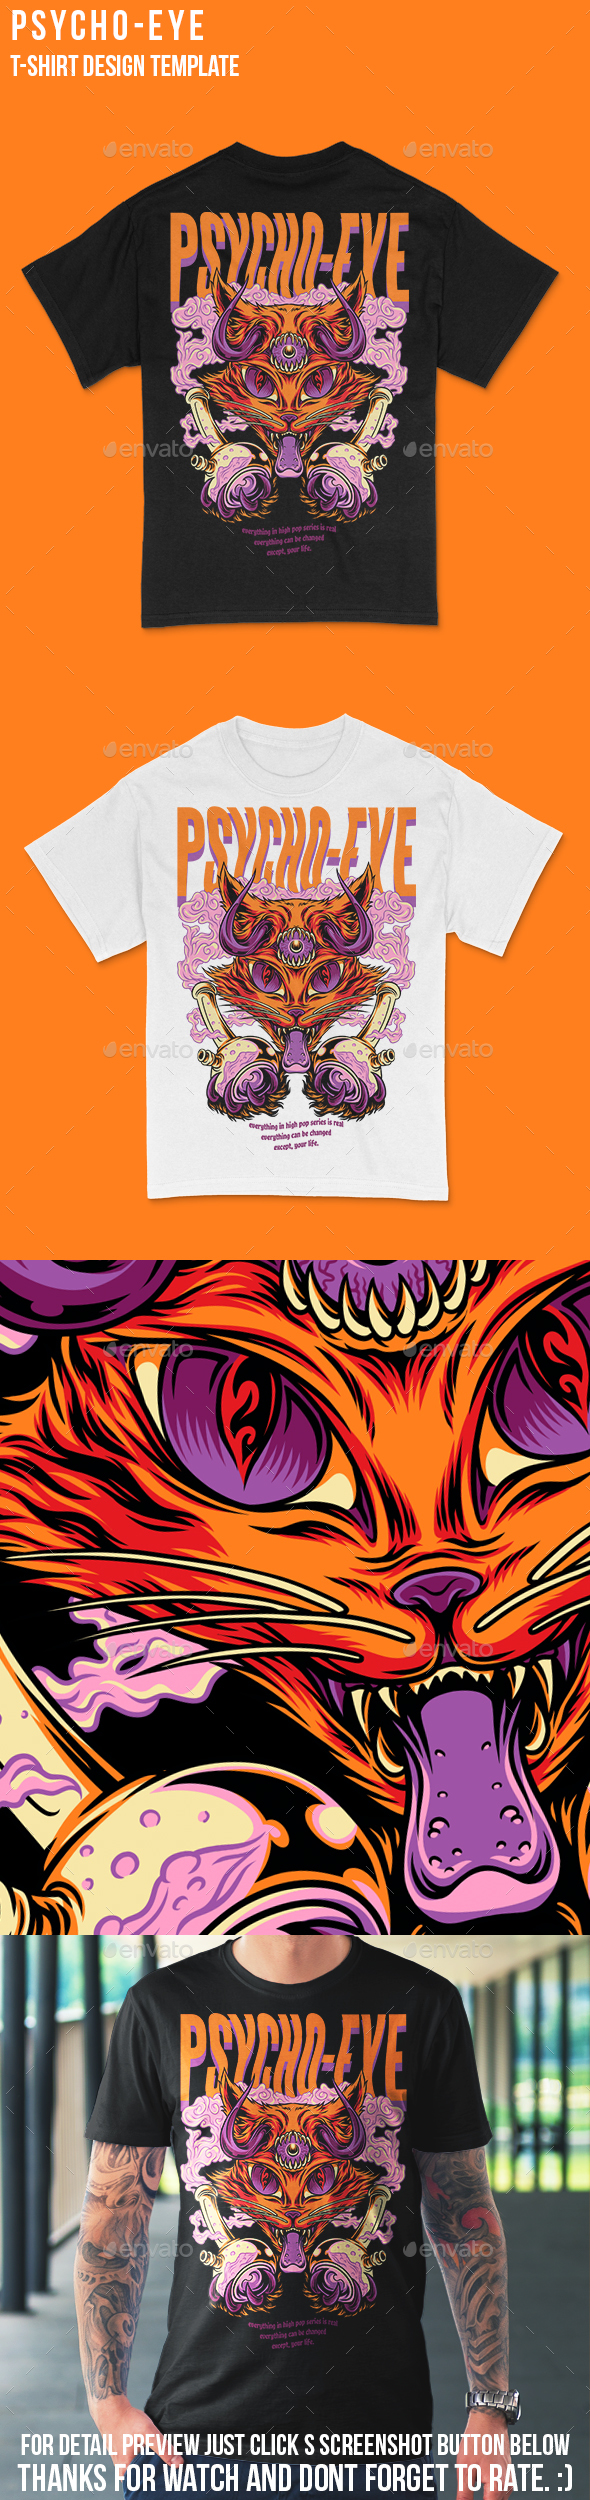 [DOWNLOAD]Psycho Eye T-Shirt Design Template